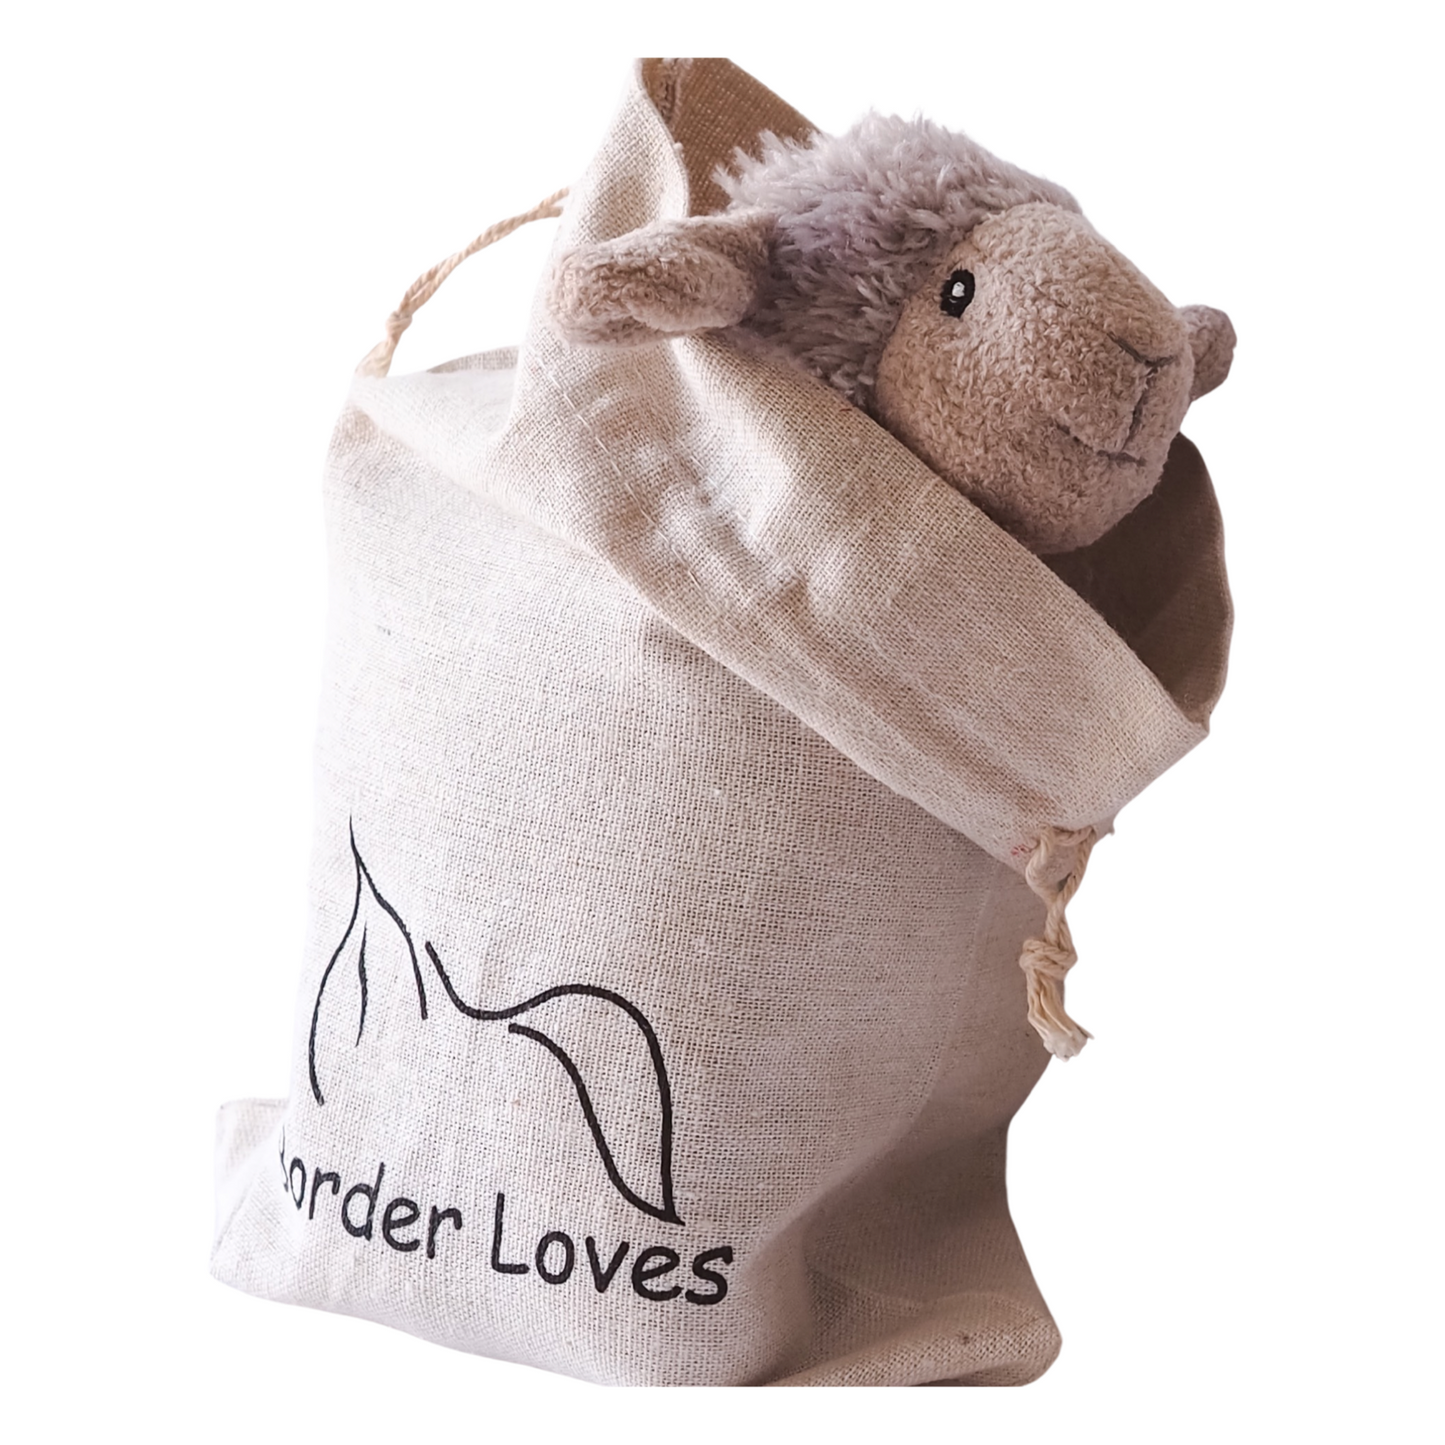 Luxury Plush lamb Dog Toy  inside the cotton reusable Border Loves Branded gift bag